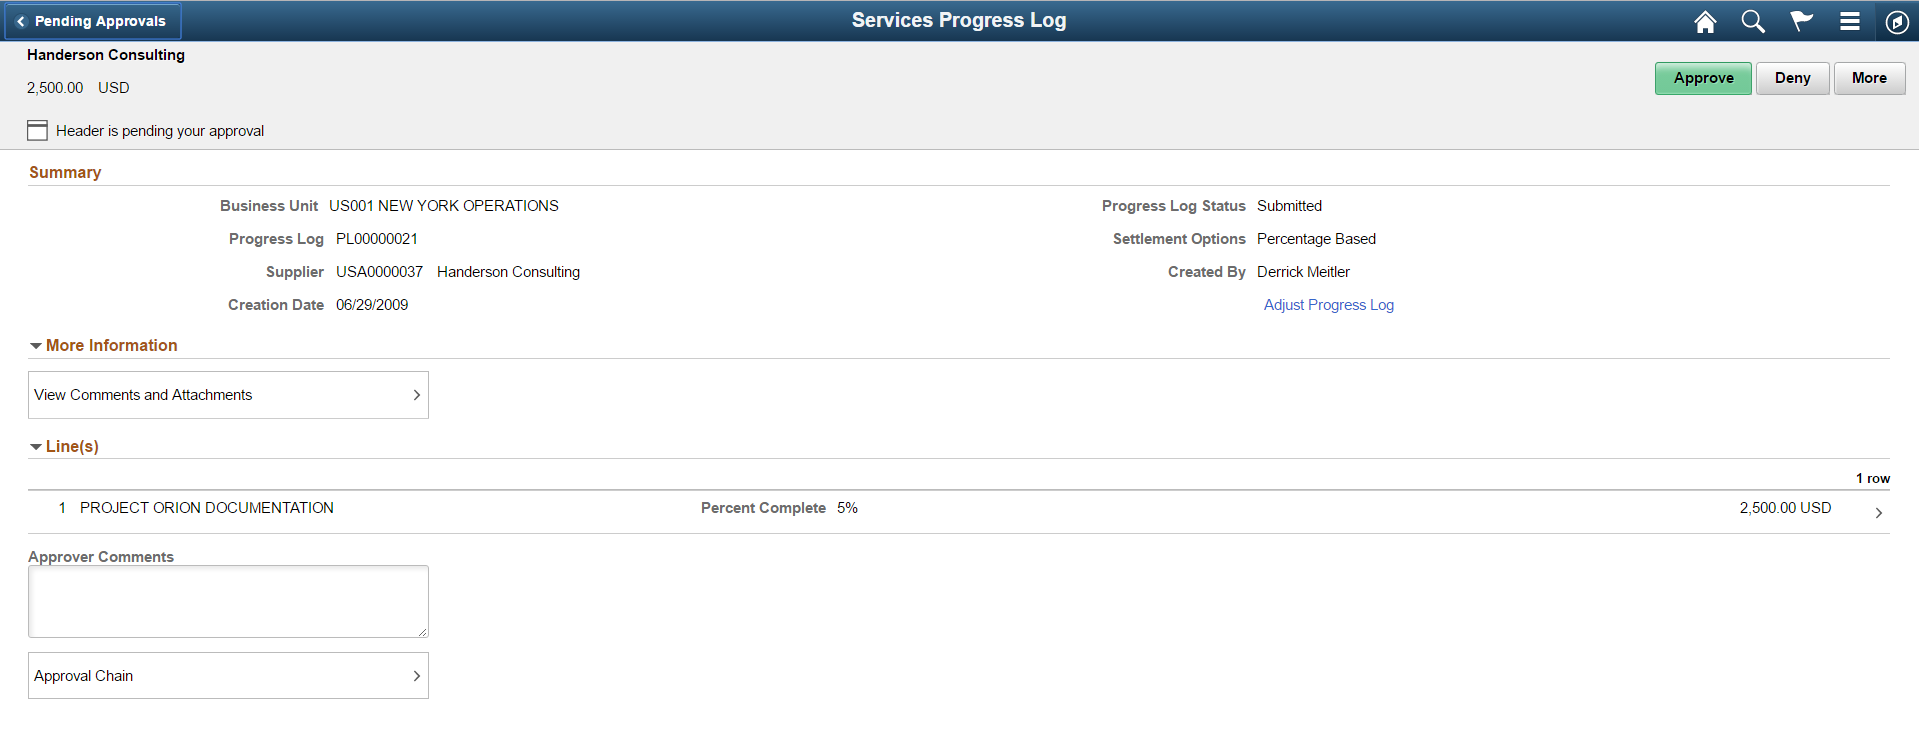 Services Progress Log header approval page